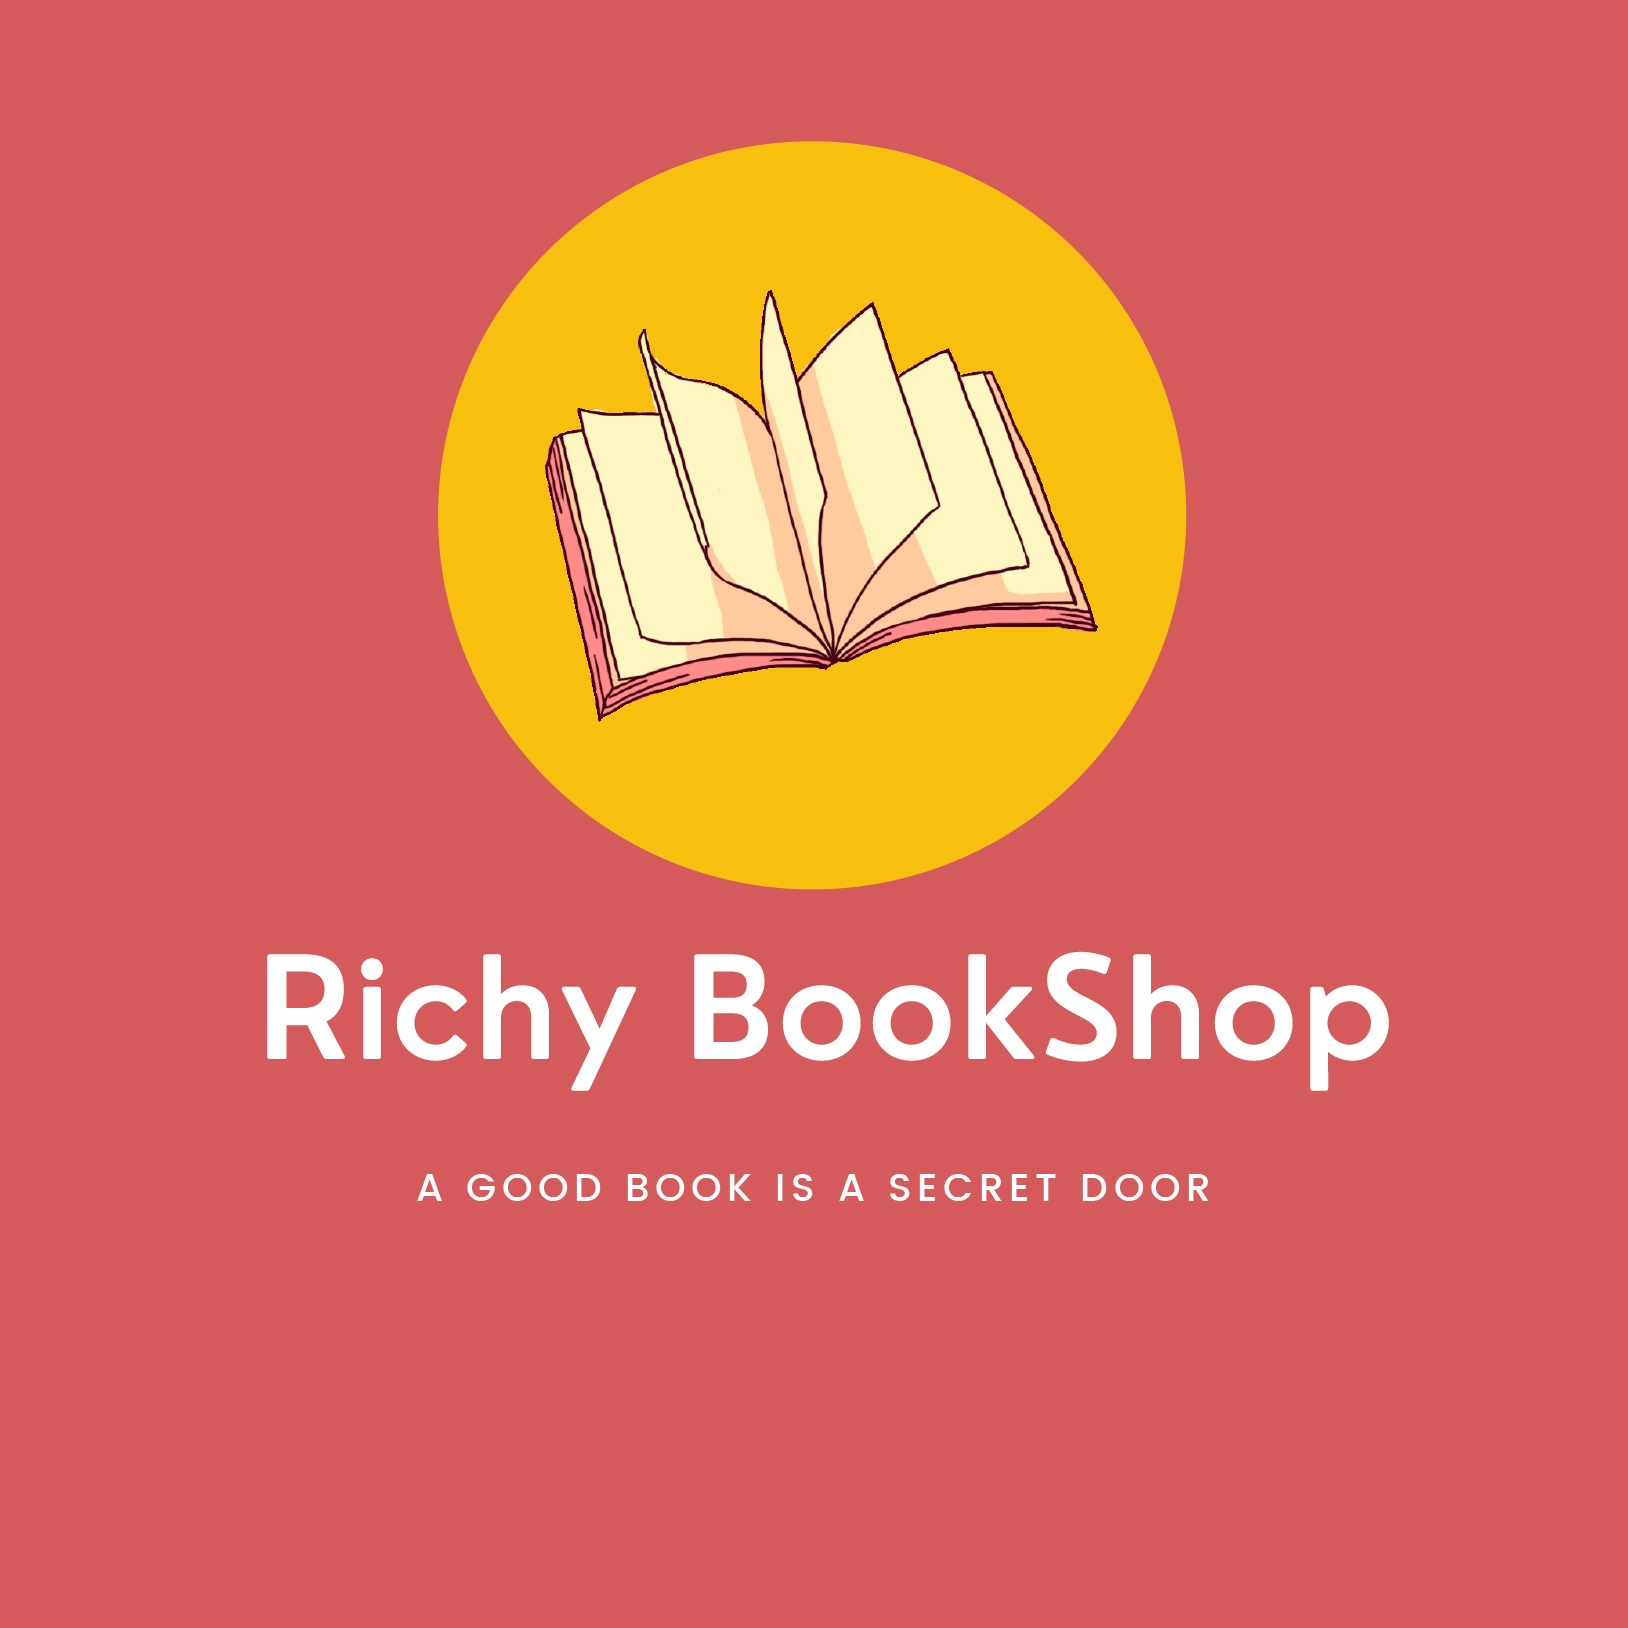 Richy bookshop